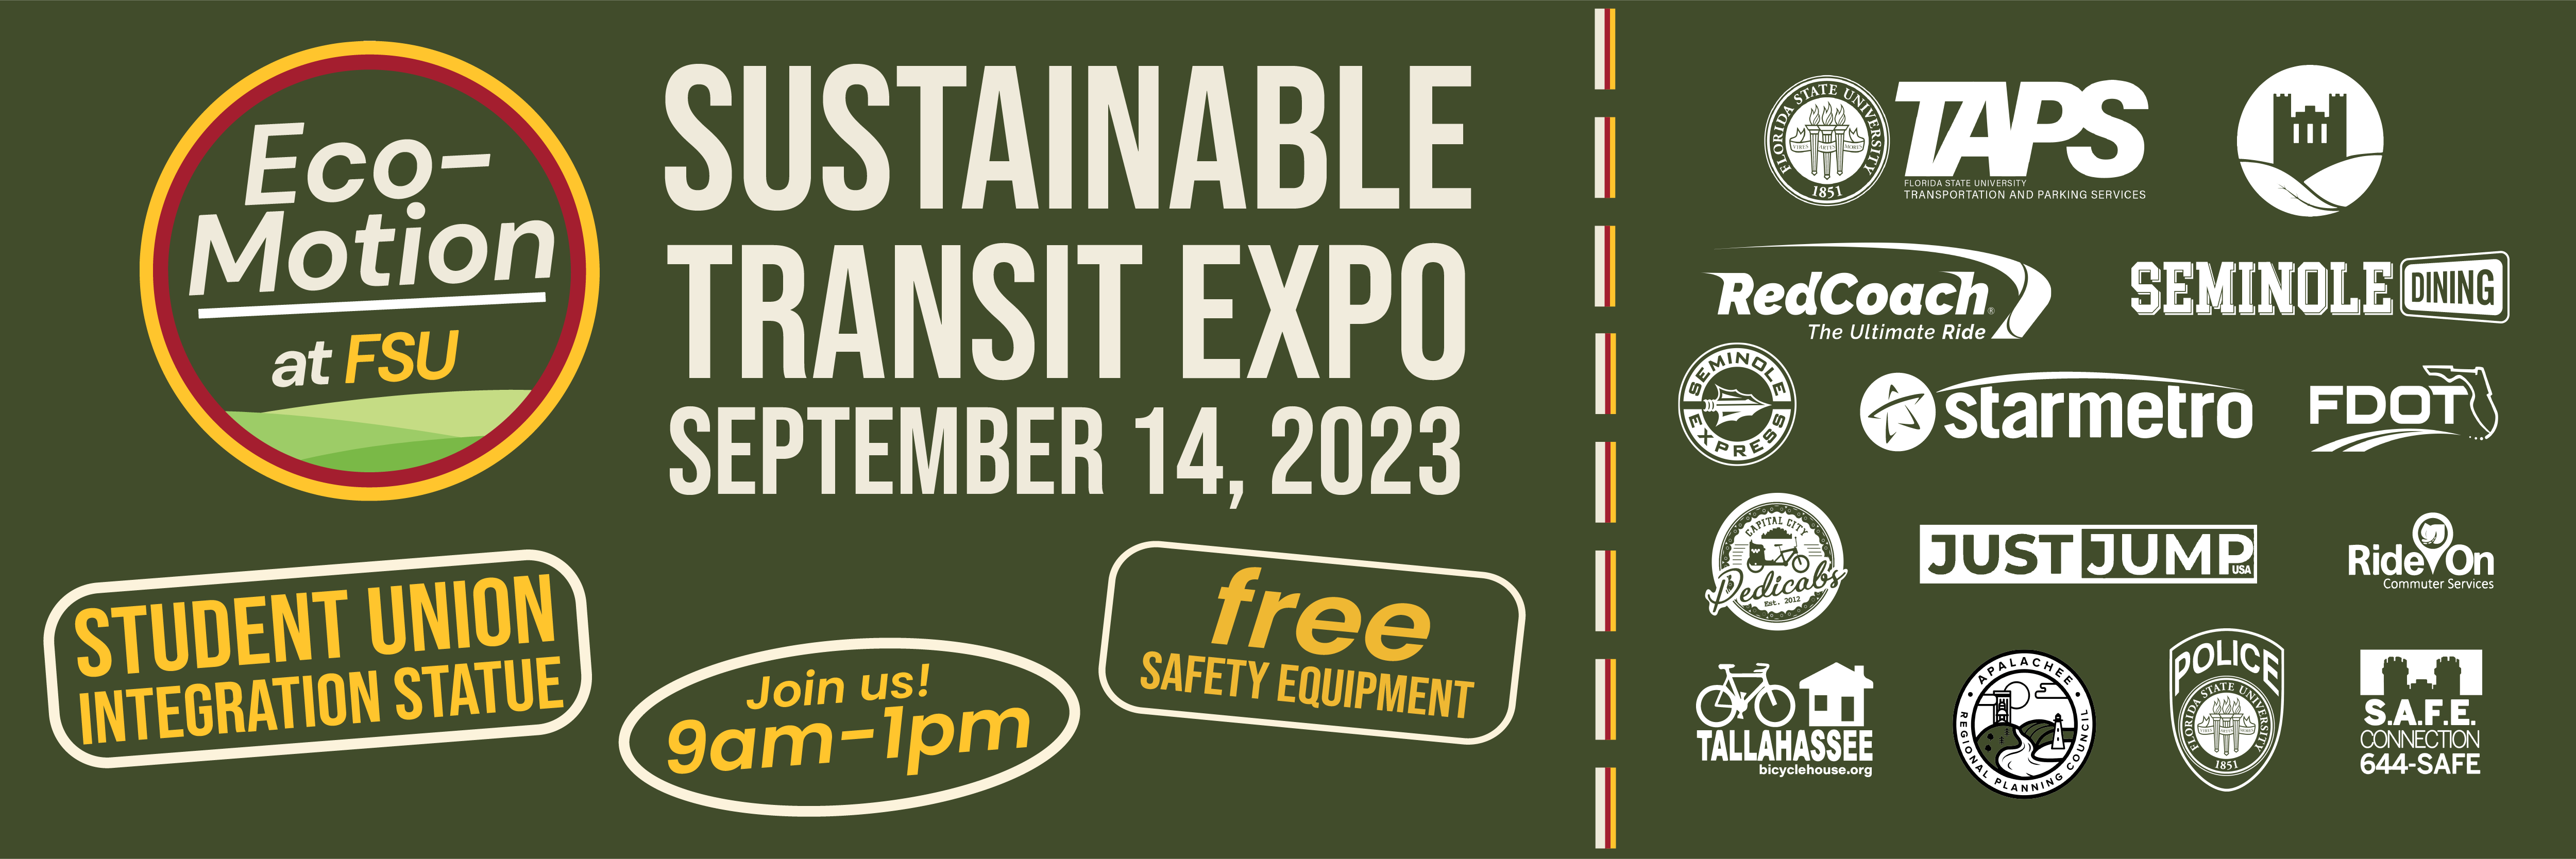 EcoMotion at FSU: Sustainable Transit Expo '23